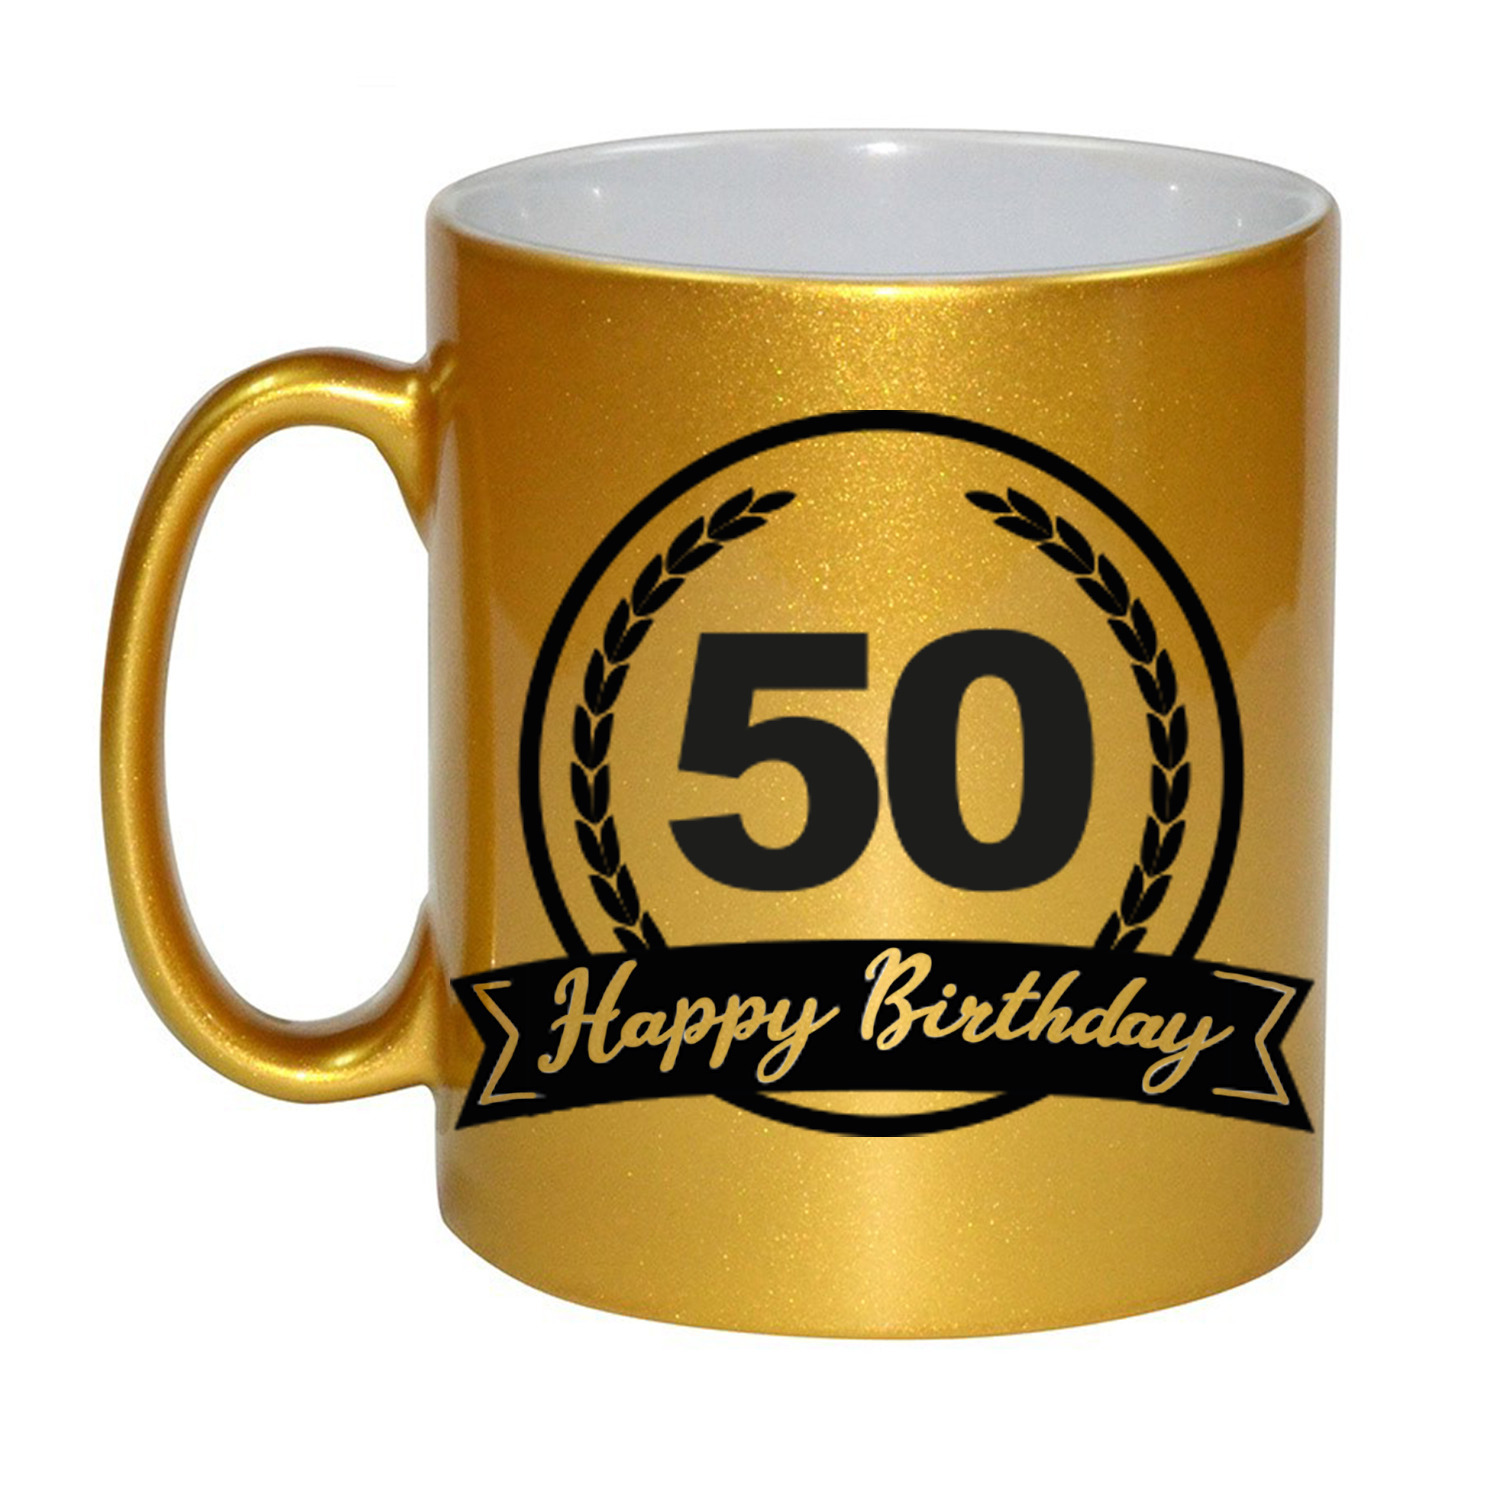 Happy Birthday 50 years gouden cadeau mok-beker met wimpel 330 ml